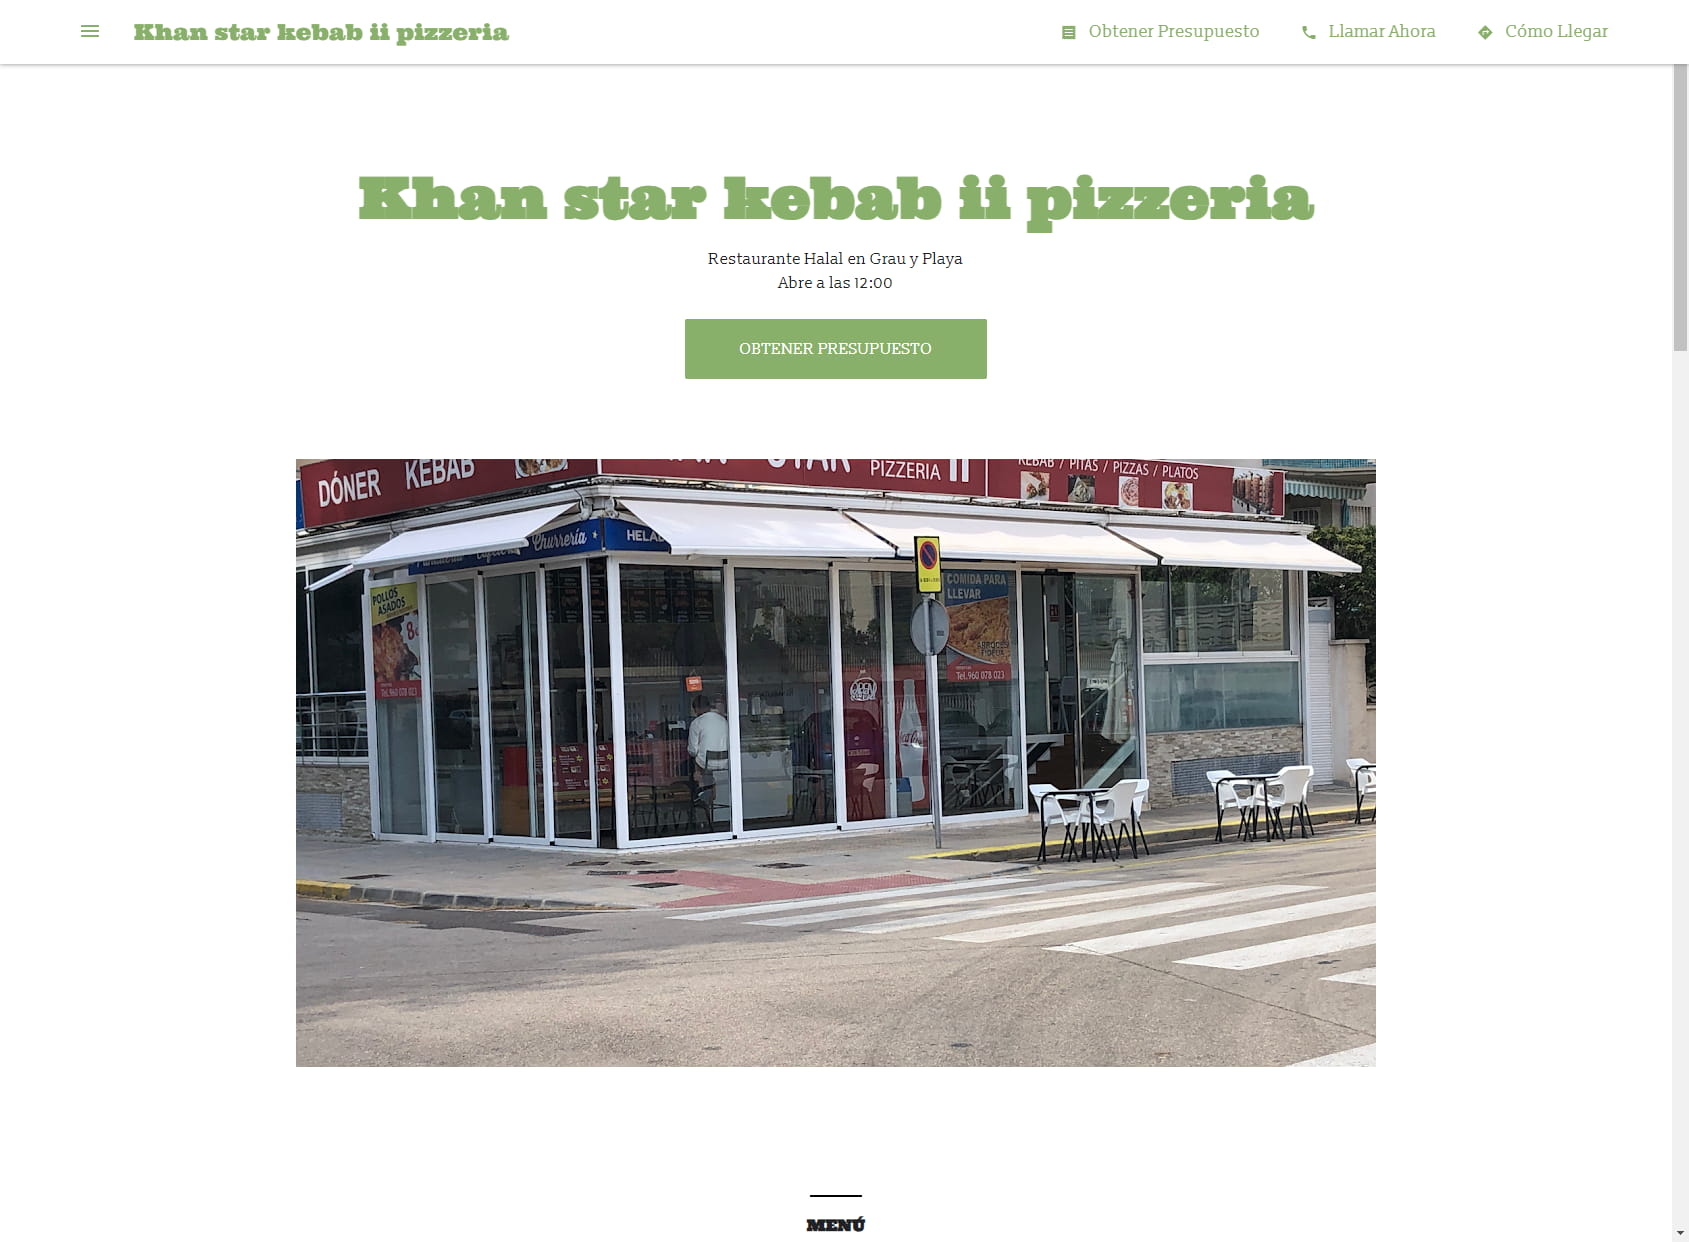 Khan star kebab ii pizzeria